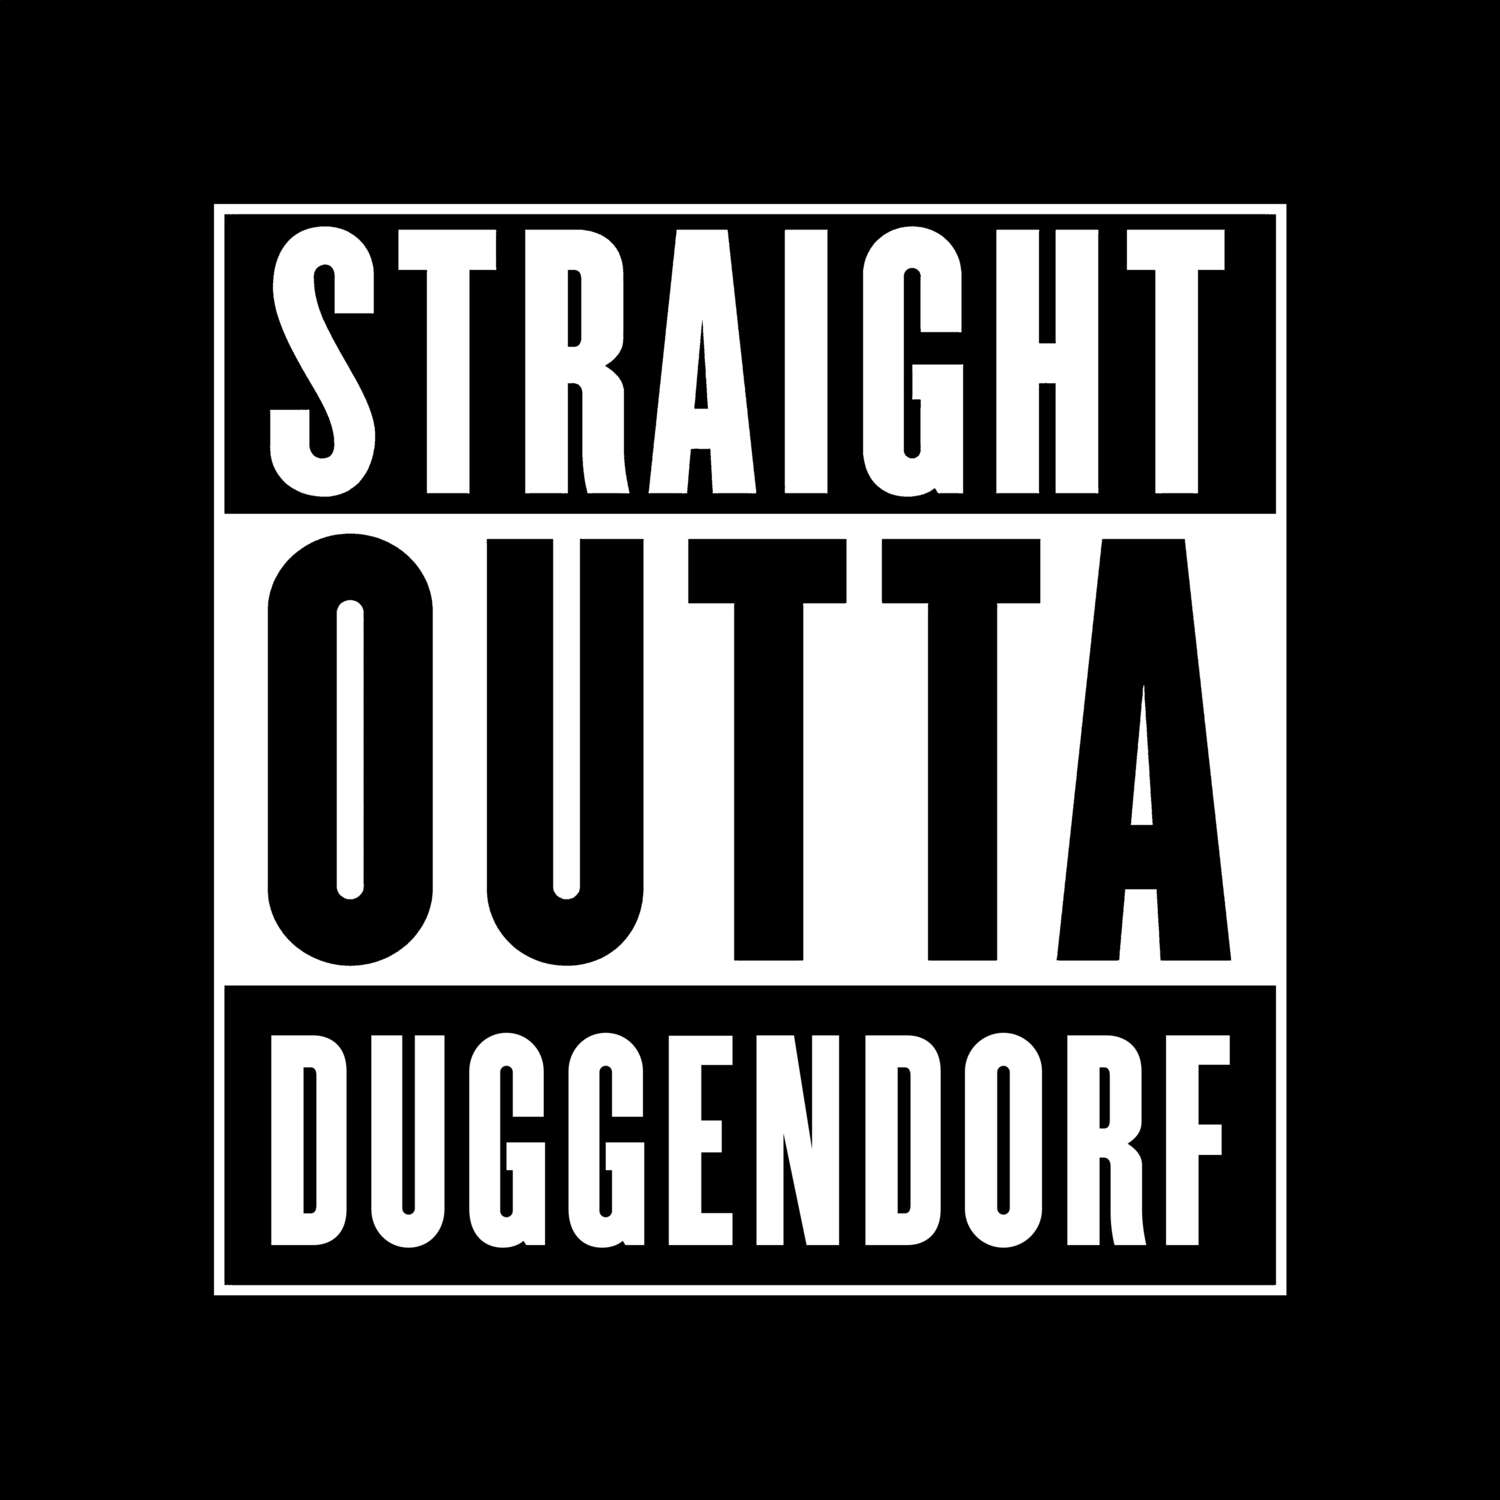 Duggendorf T-Shirt »Straight Outta«